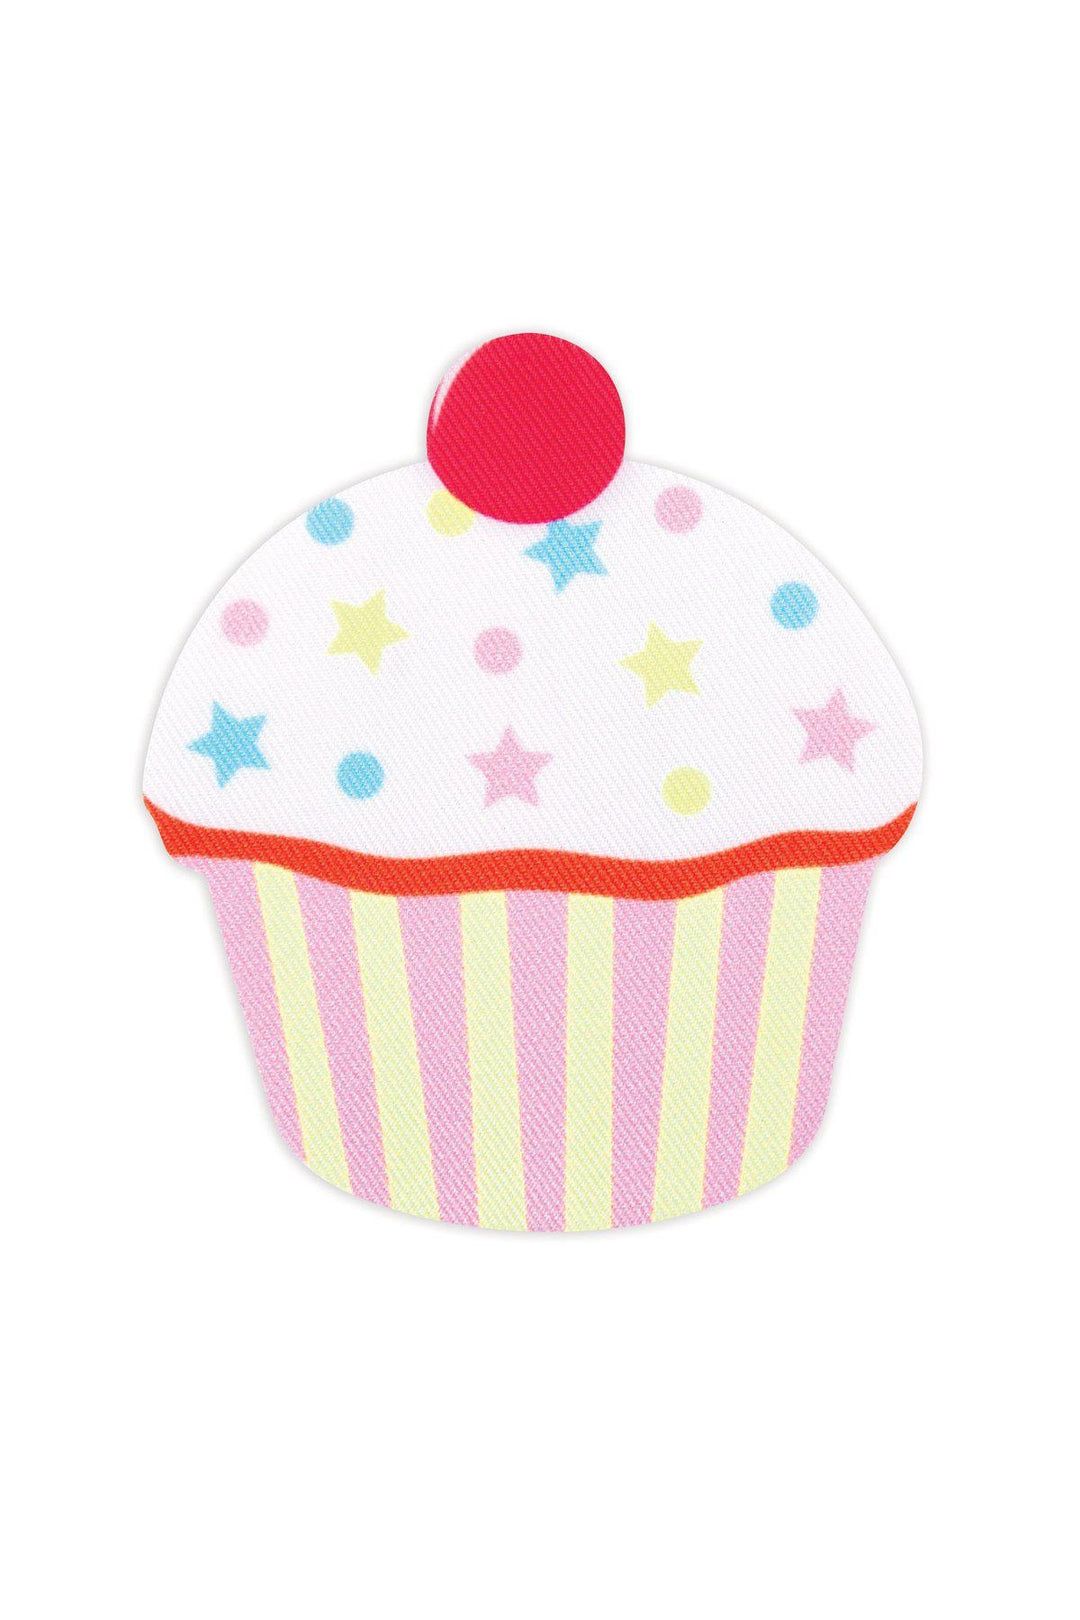 Cupcake Pasty-Pasties-Peekaboo Pasties-Pink-O/S-SEXYSHOES.COM